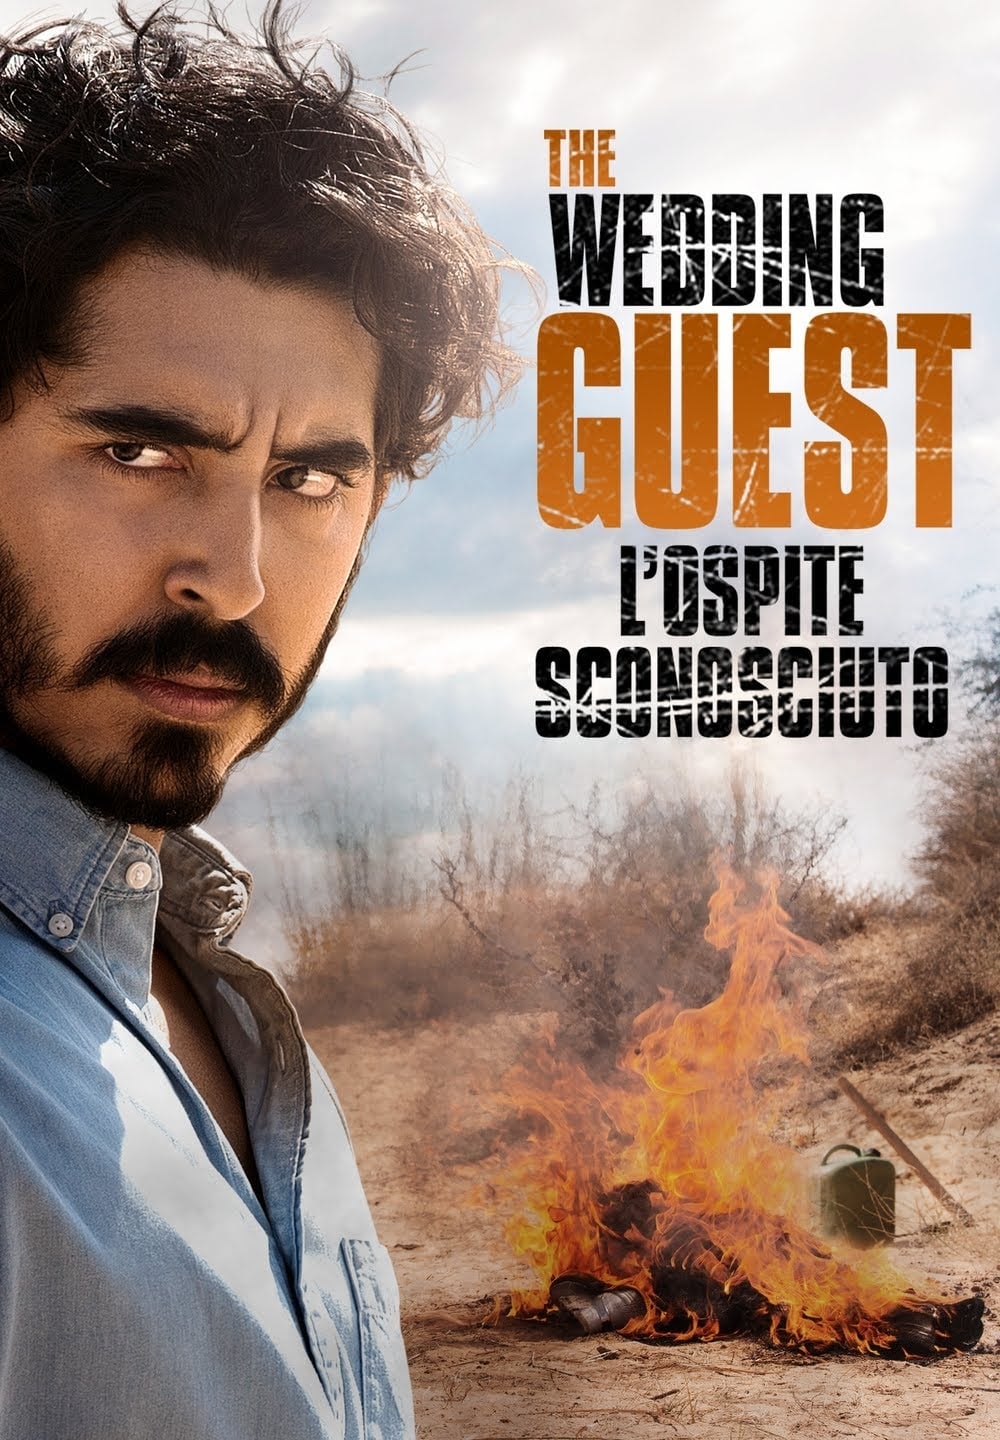 The Wedding Guest - L’ospite sconosciuto film